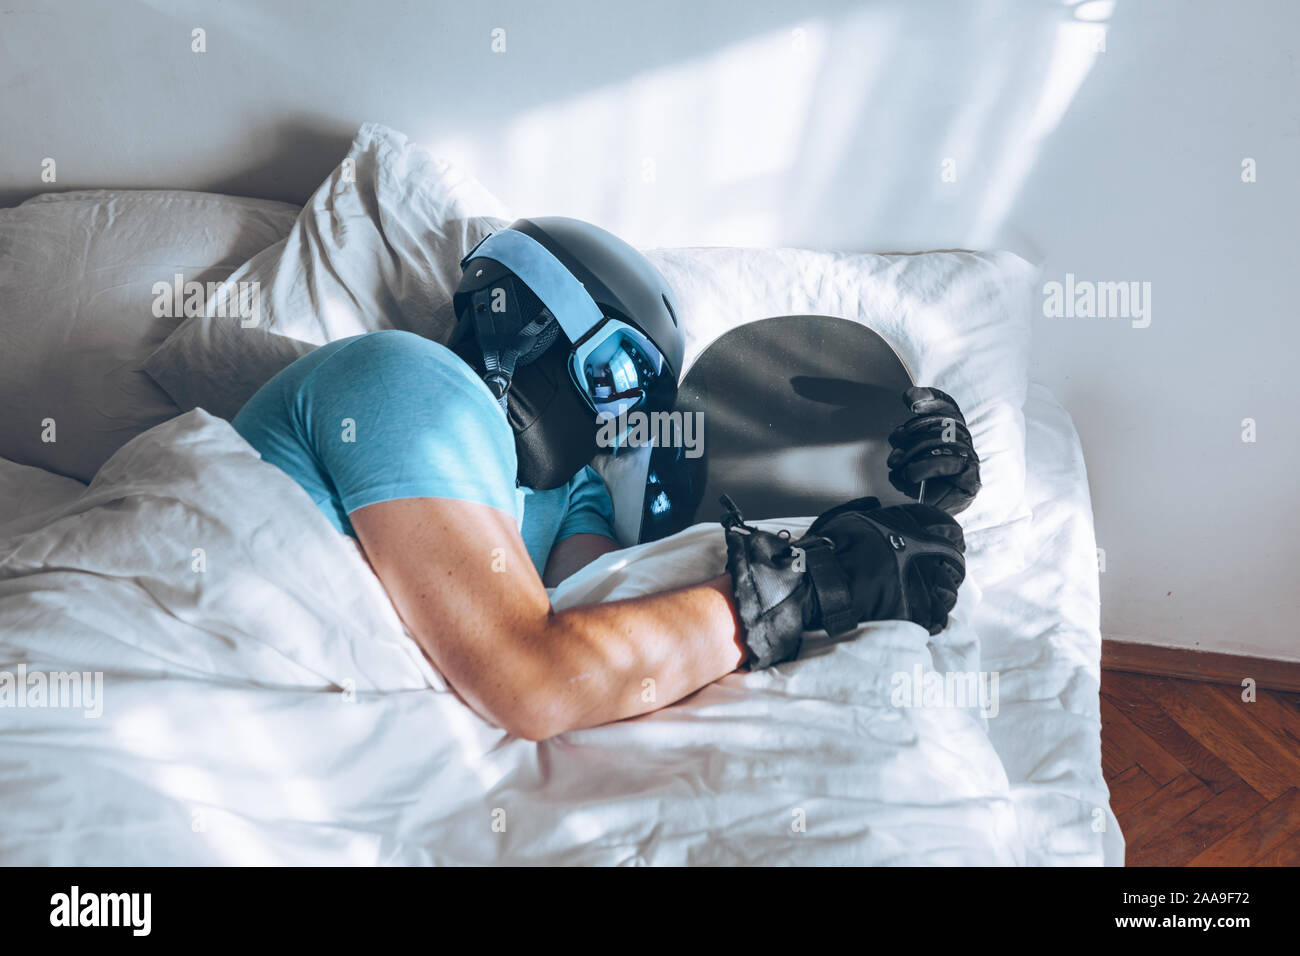 man-in-bed-with-snowboard-ski-googles-and-helmet-2AA9F72.jpg